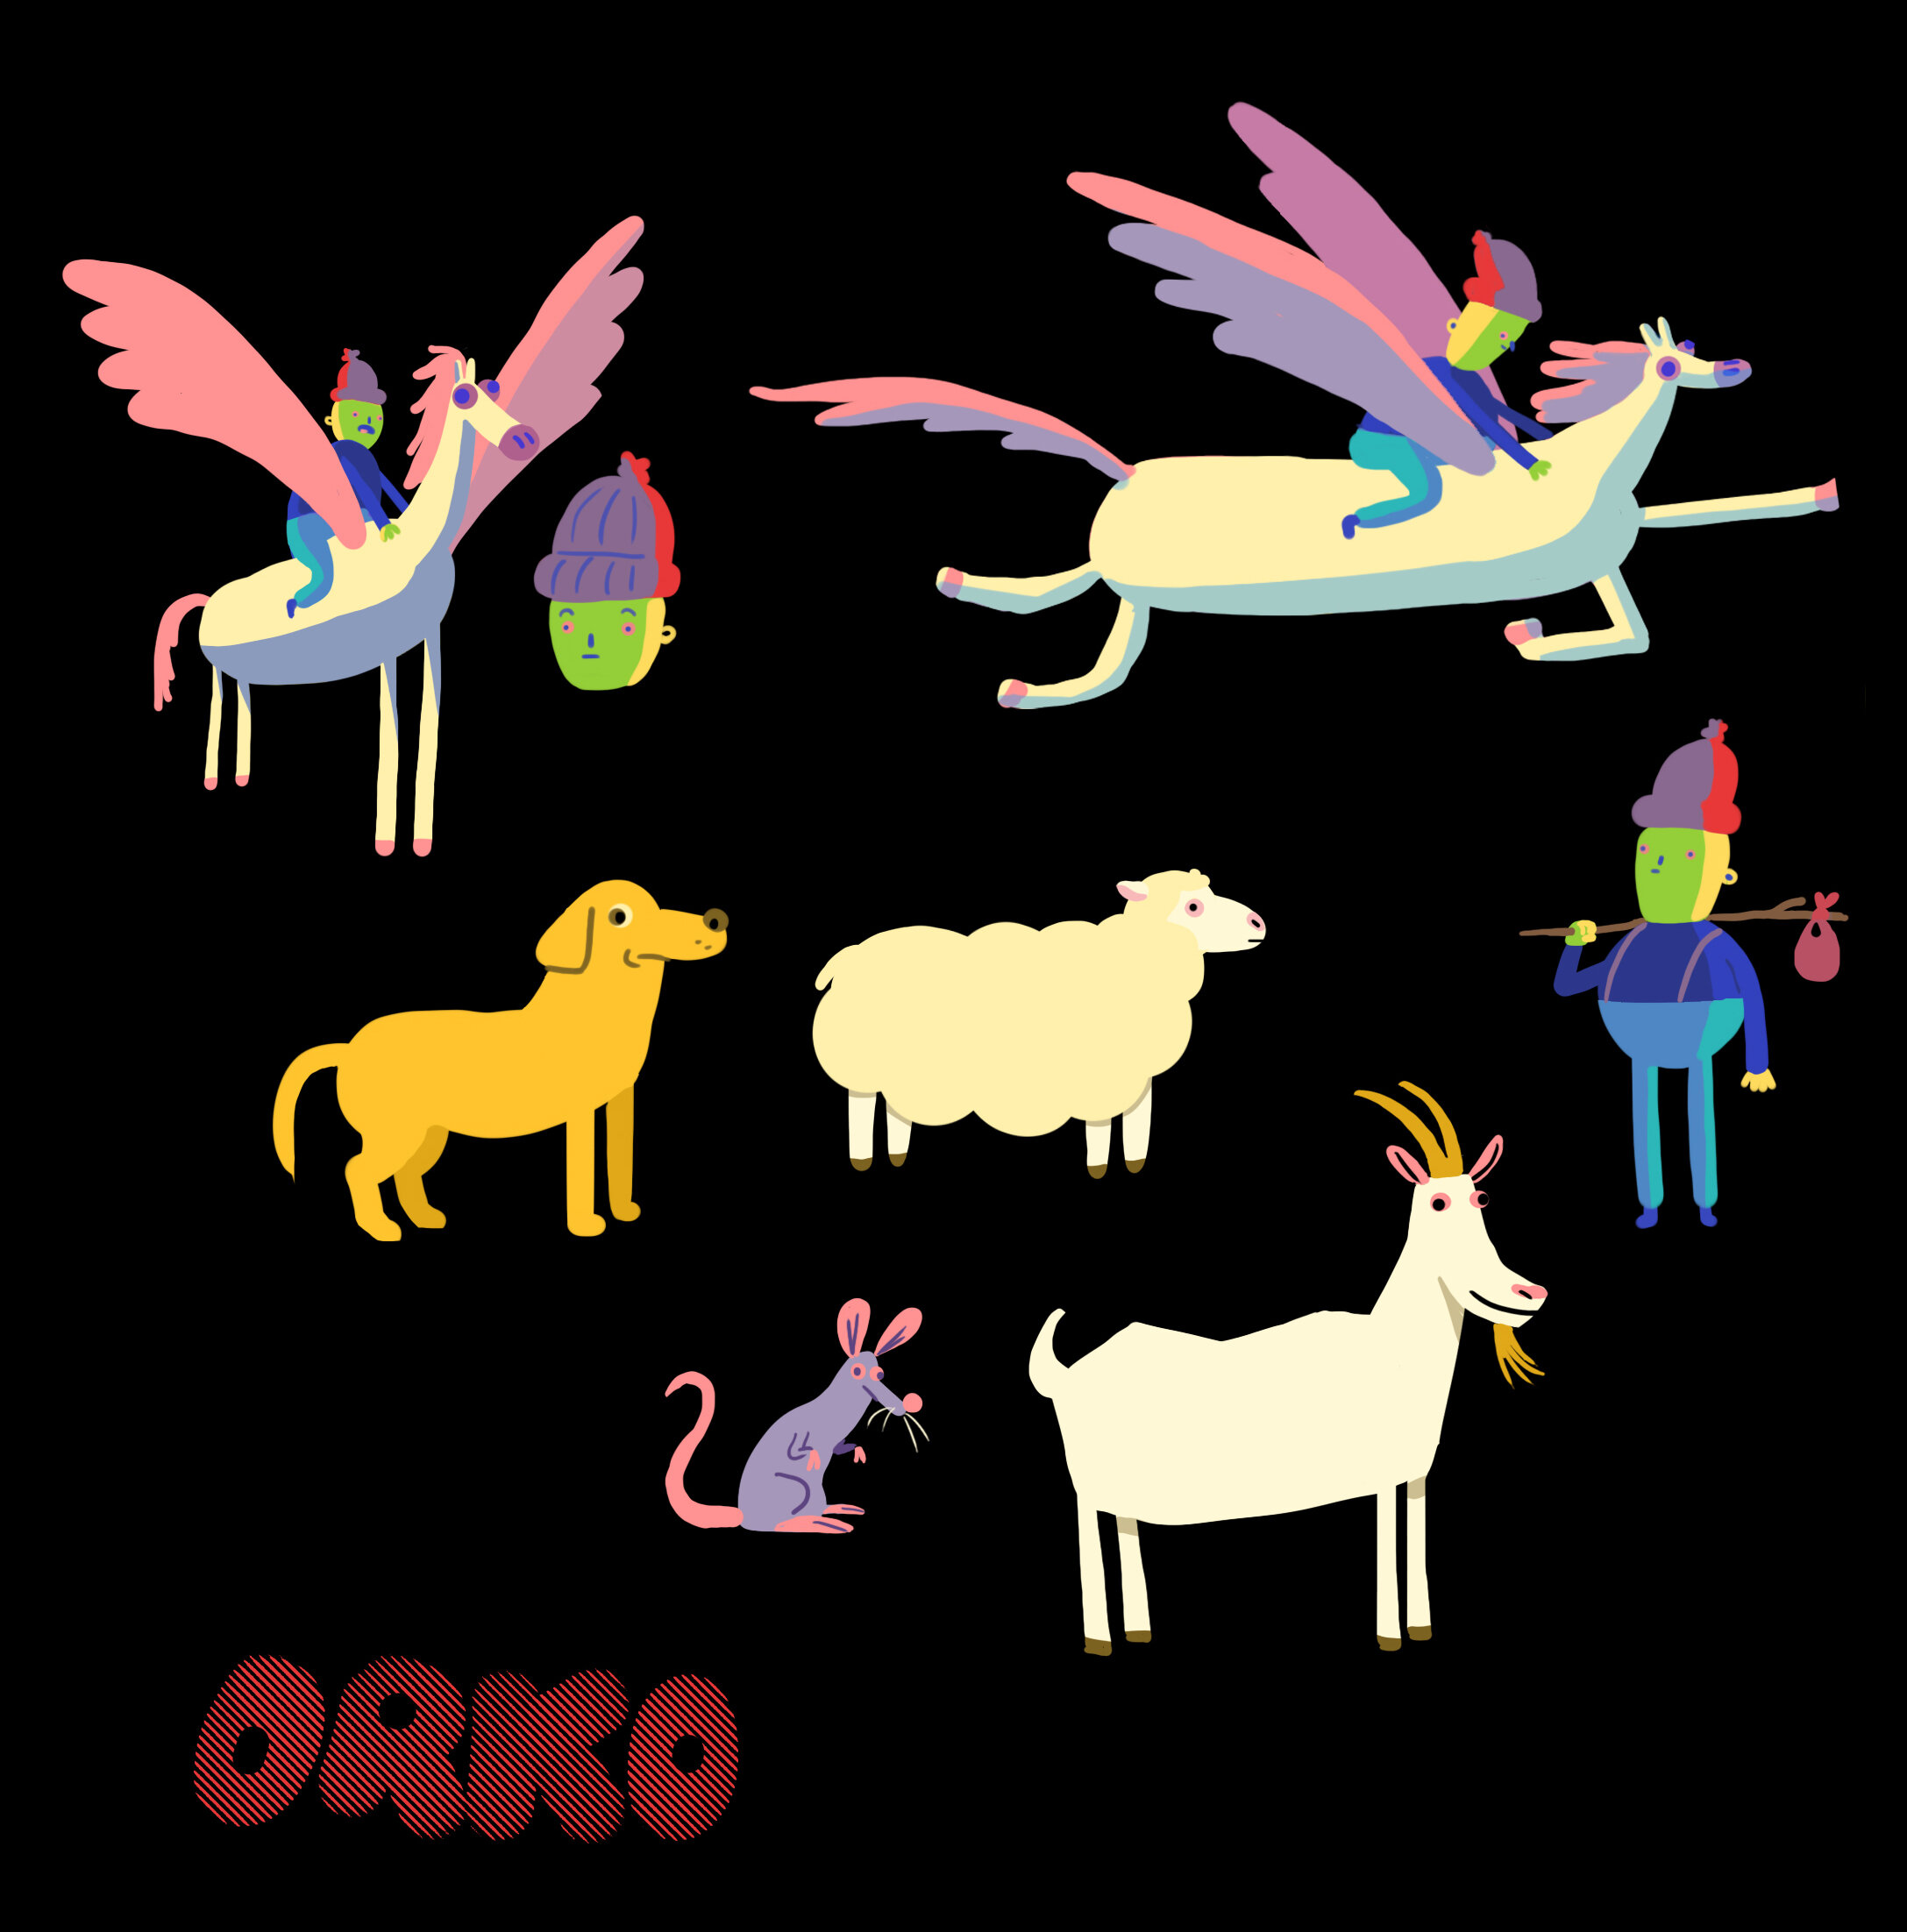 orko_designs_post.jpg